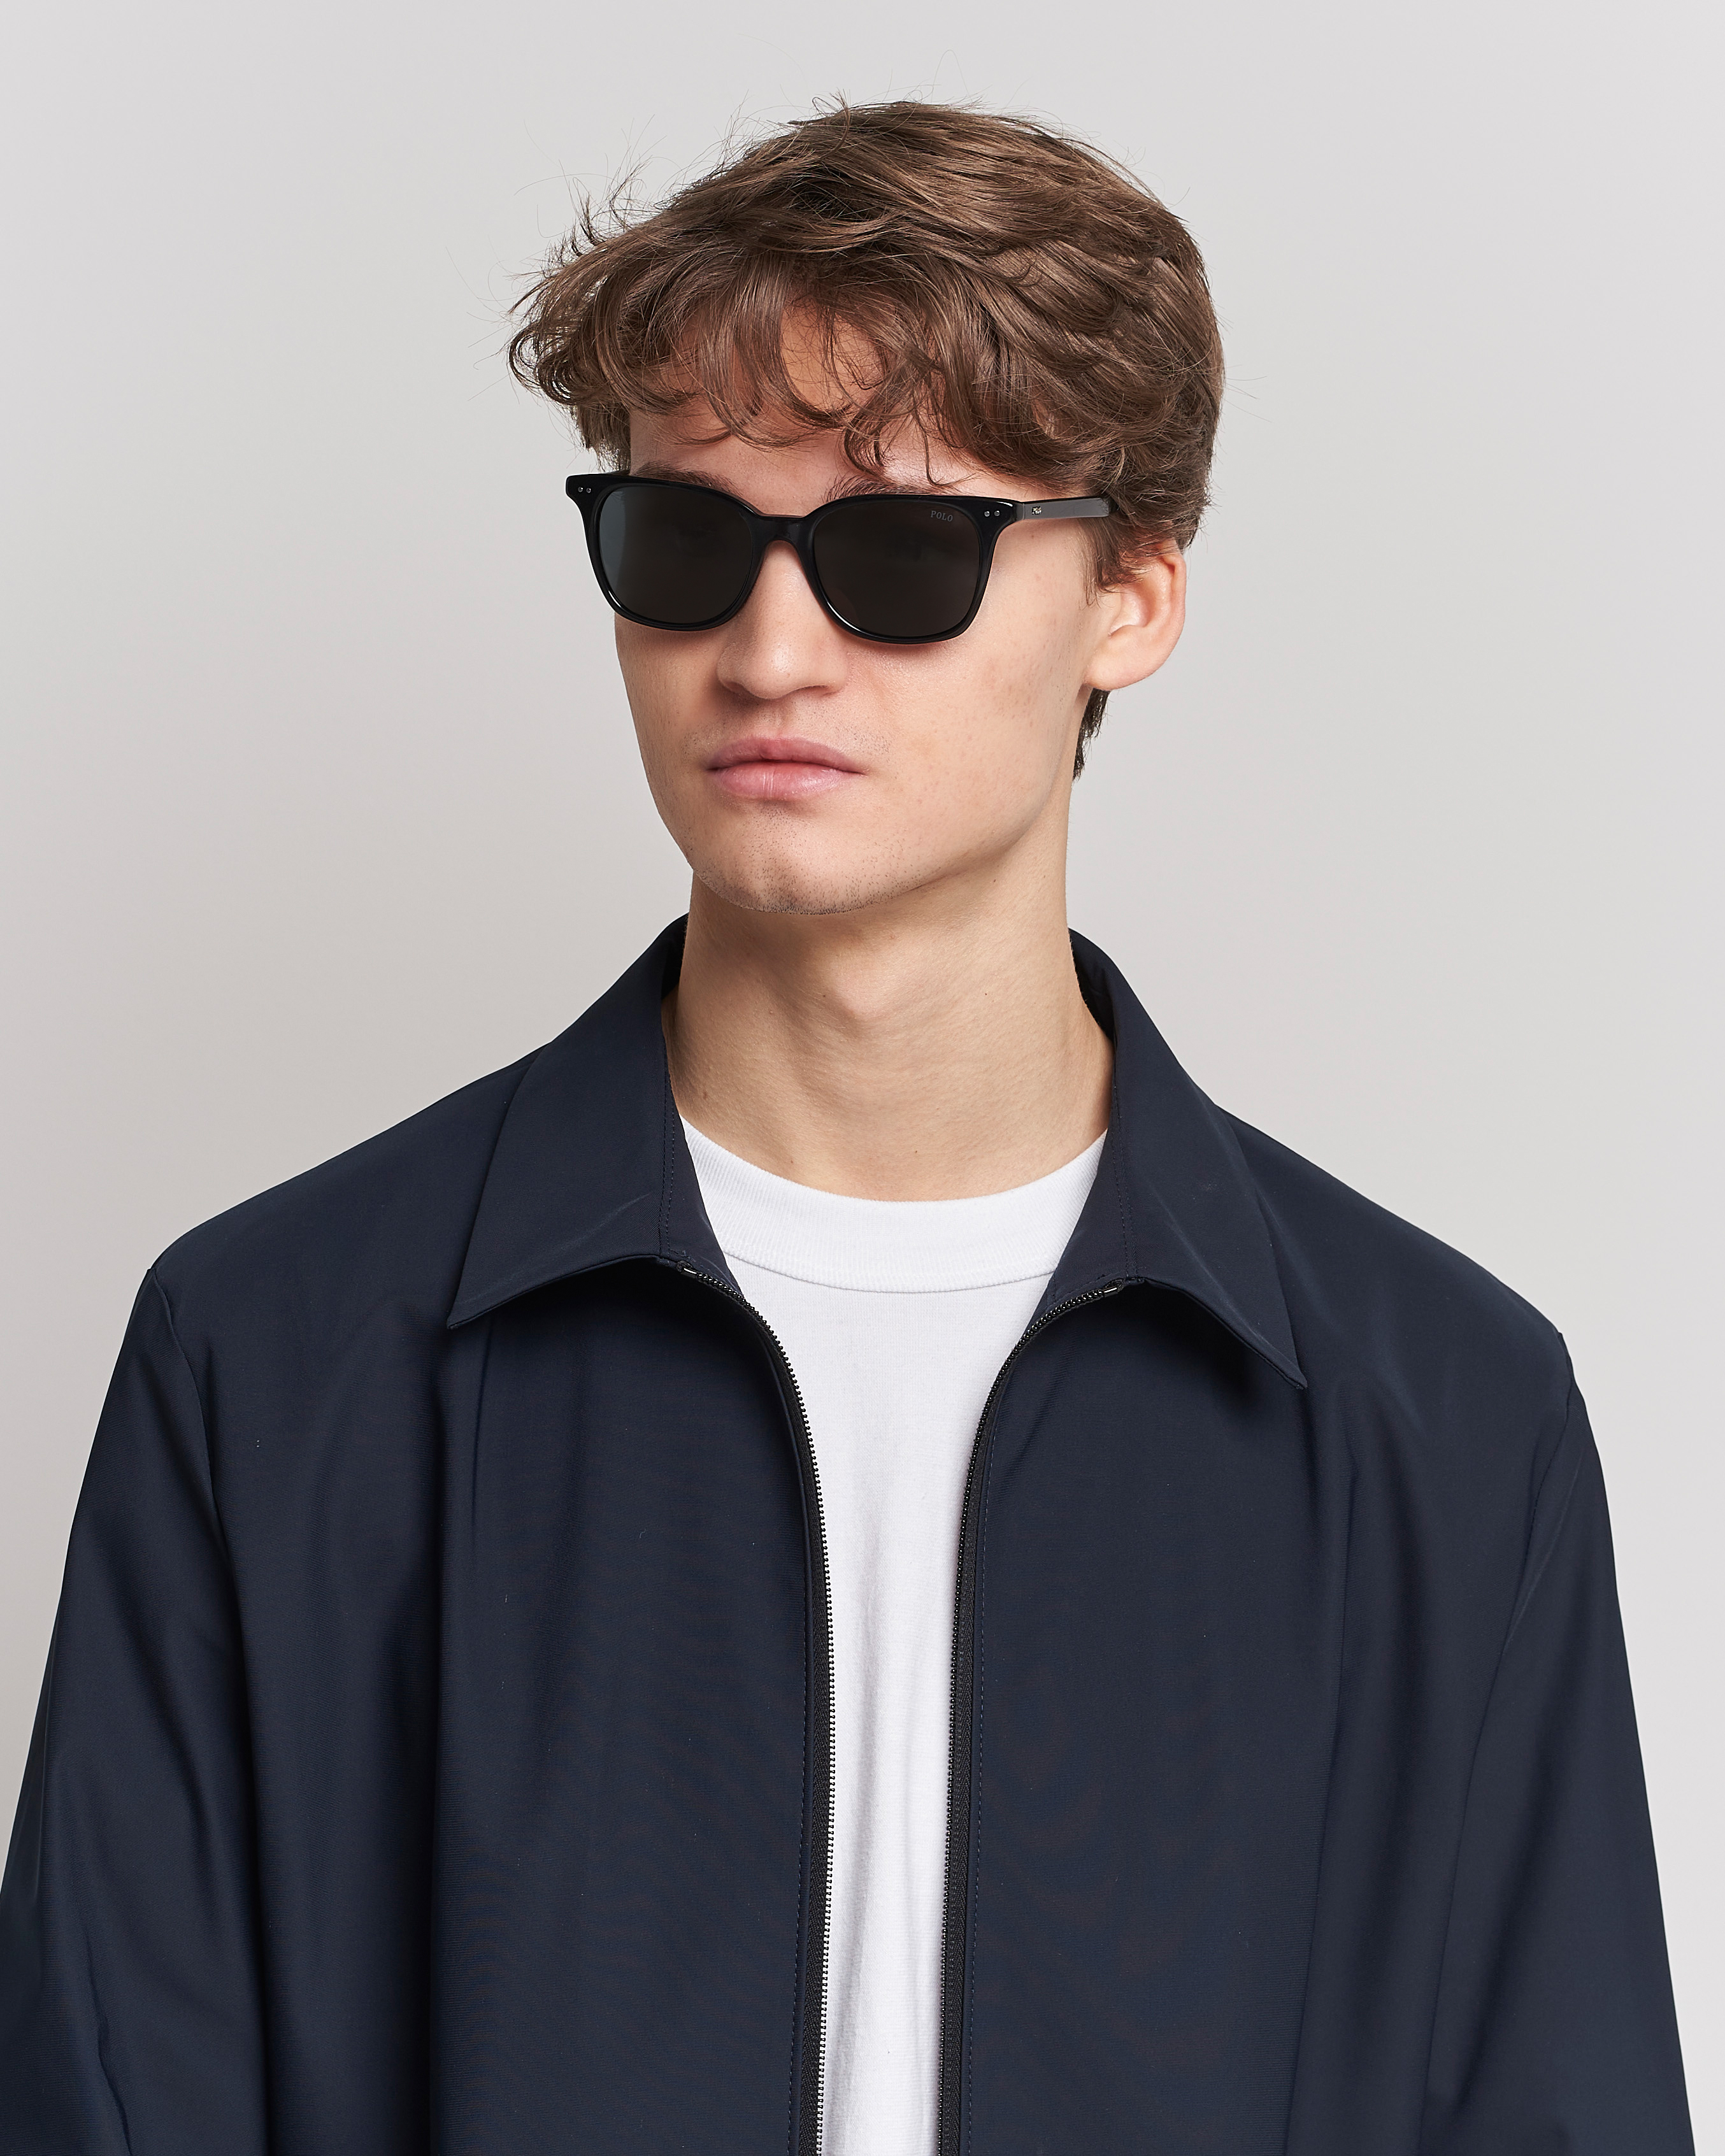 Mies | Polo Ralph Lauren | Polo Ralph Lauren | 0PH4187 Sunglasses Shiny Black